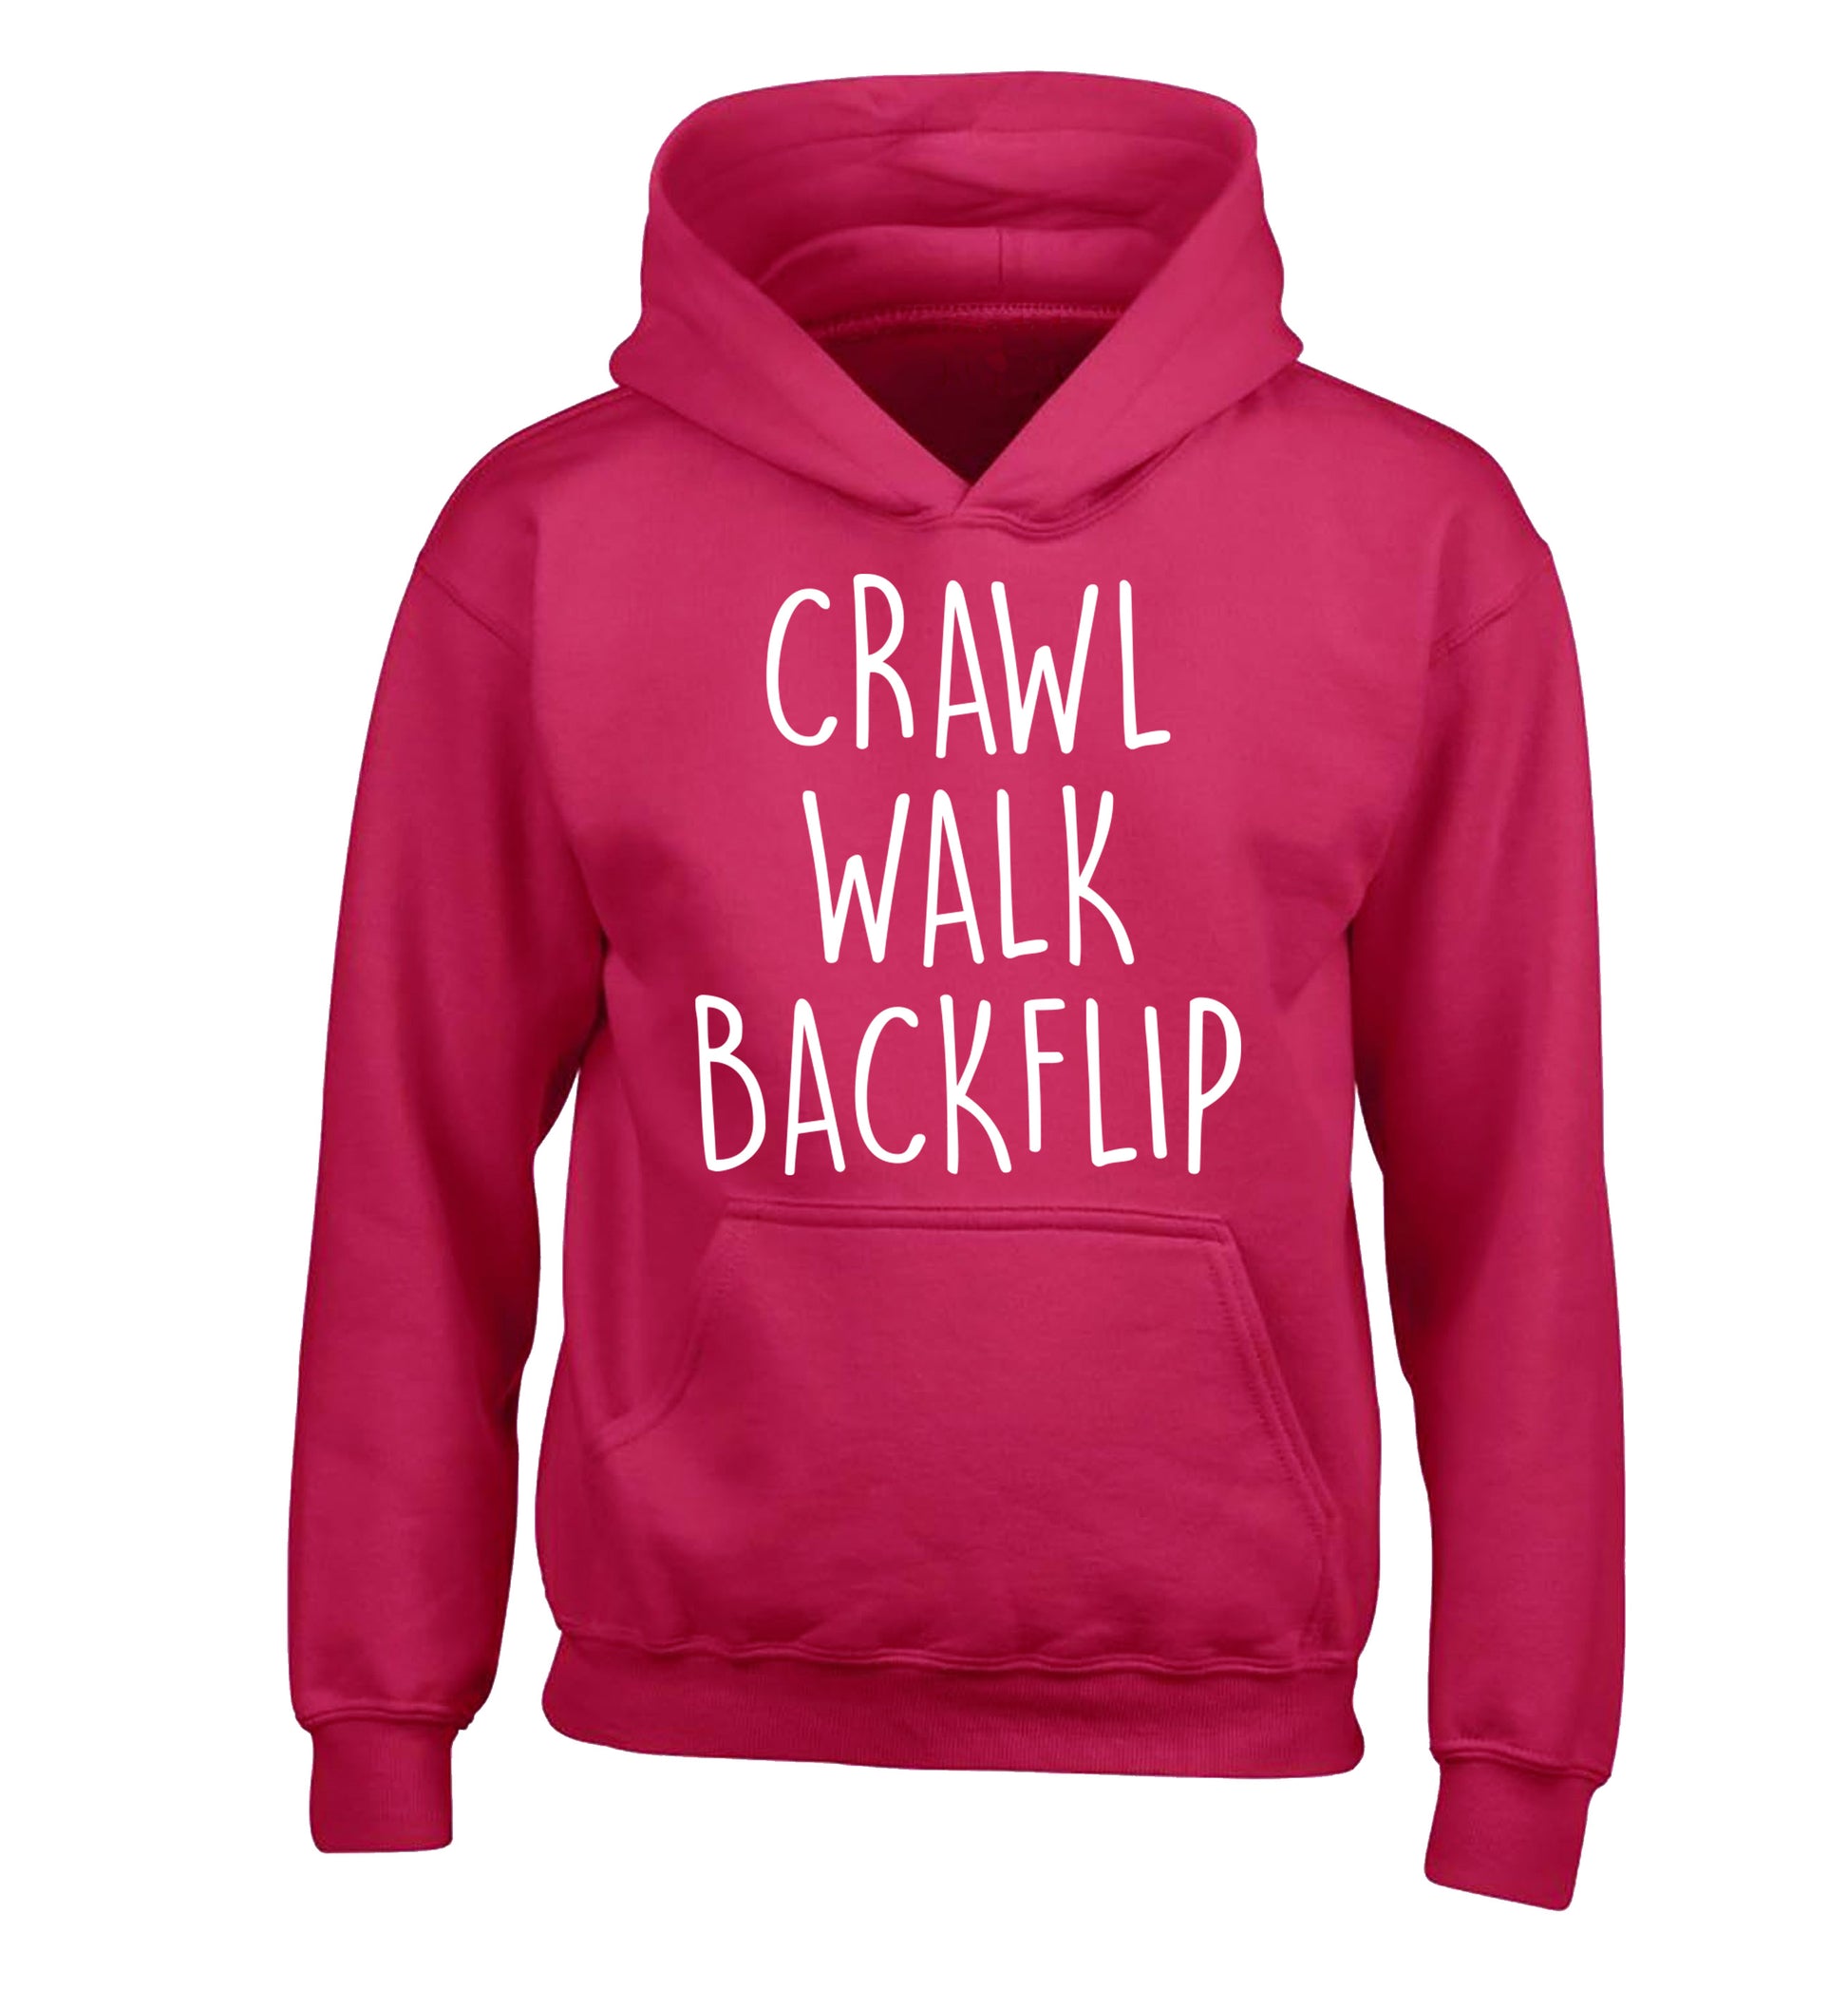 Crawl Walk Backflip children's pink hoodie 12-13 Years